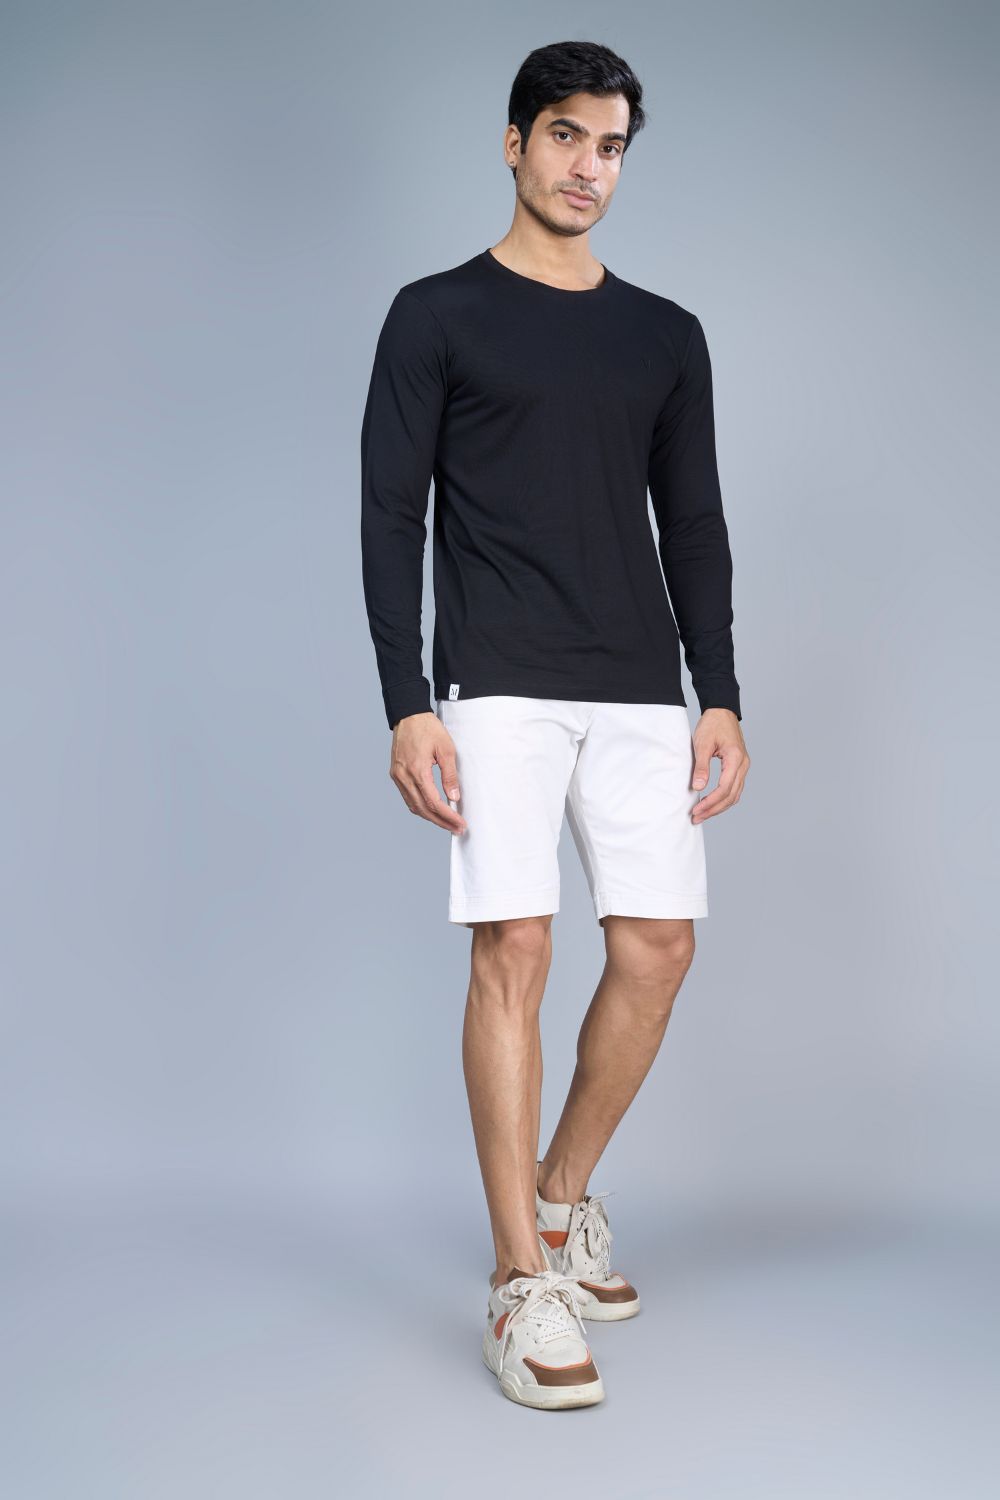 Full Sleeve Solid - Black  Maxzone Clothing   